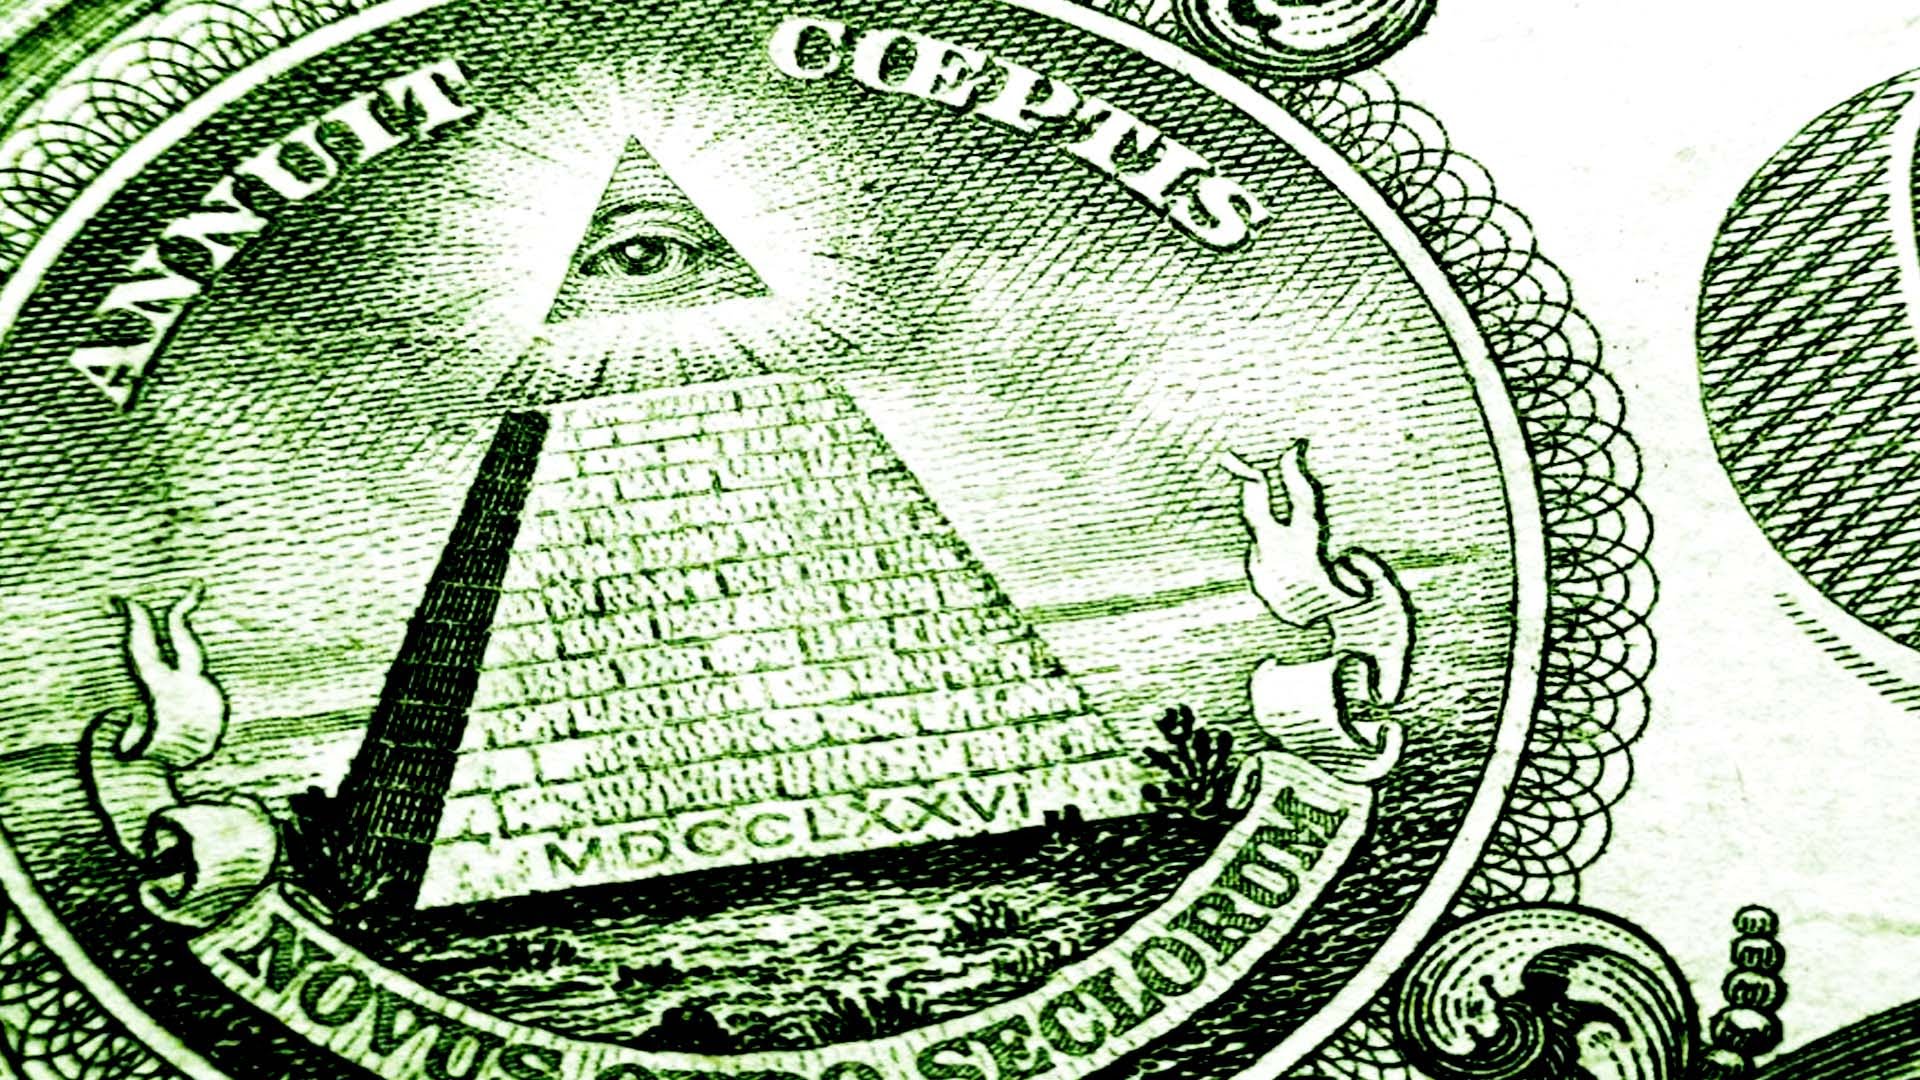 The Illuminati - secret society